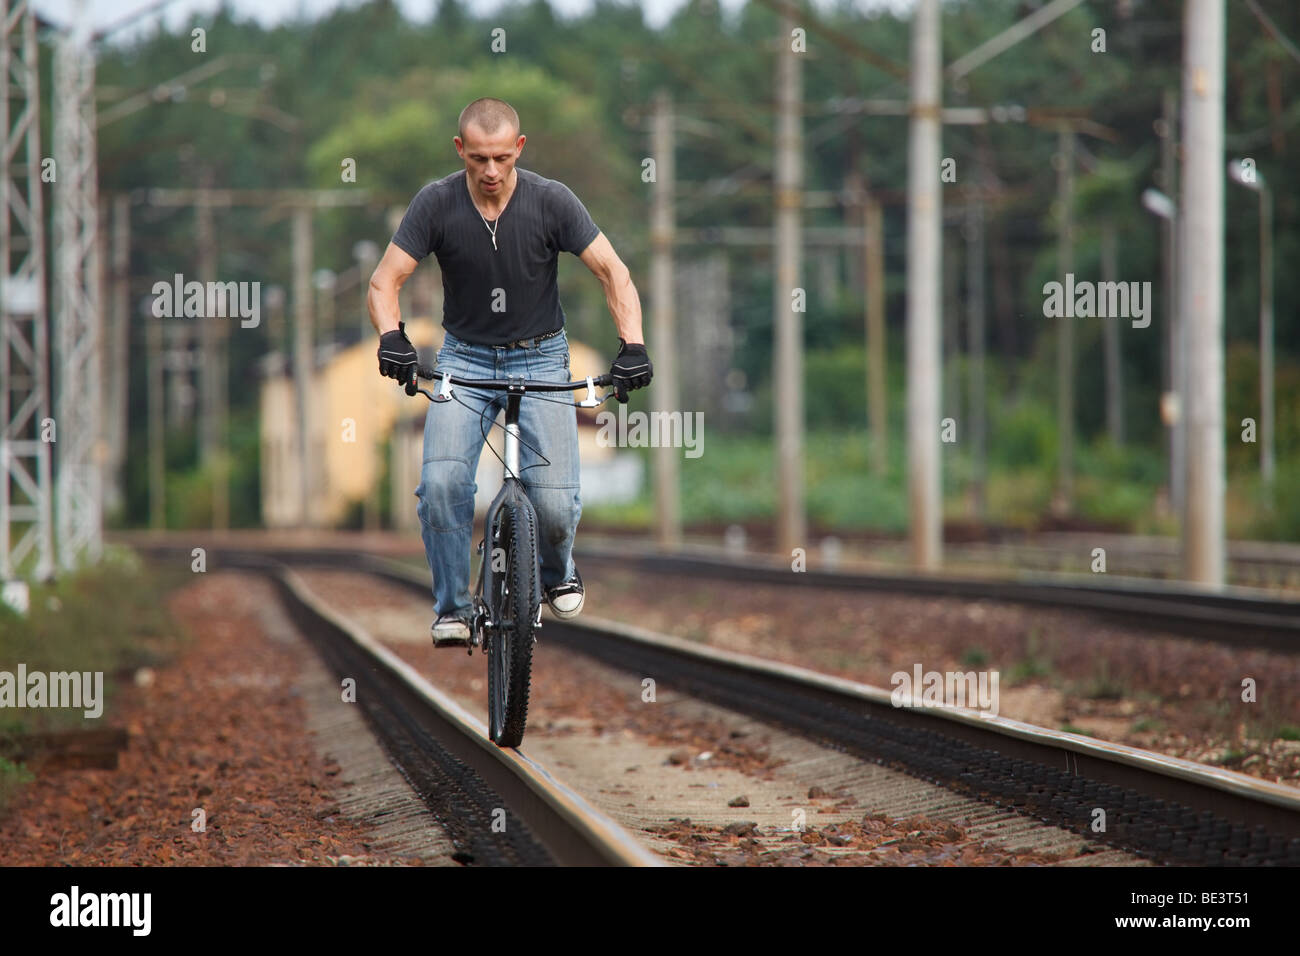 Man riding with bicycle on railways rail Stock Photo